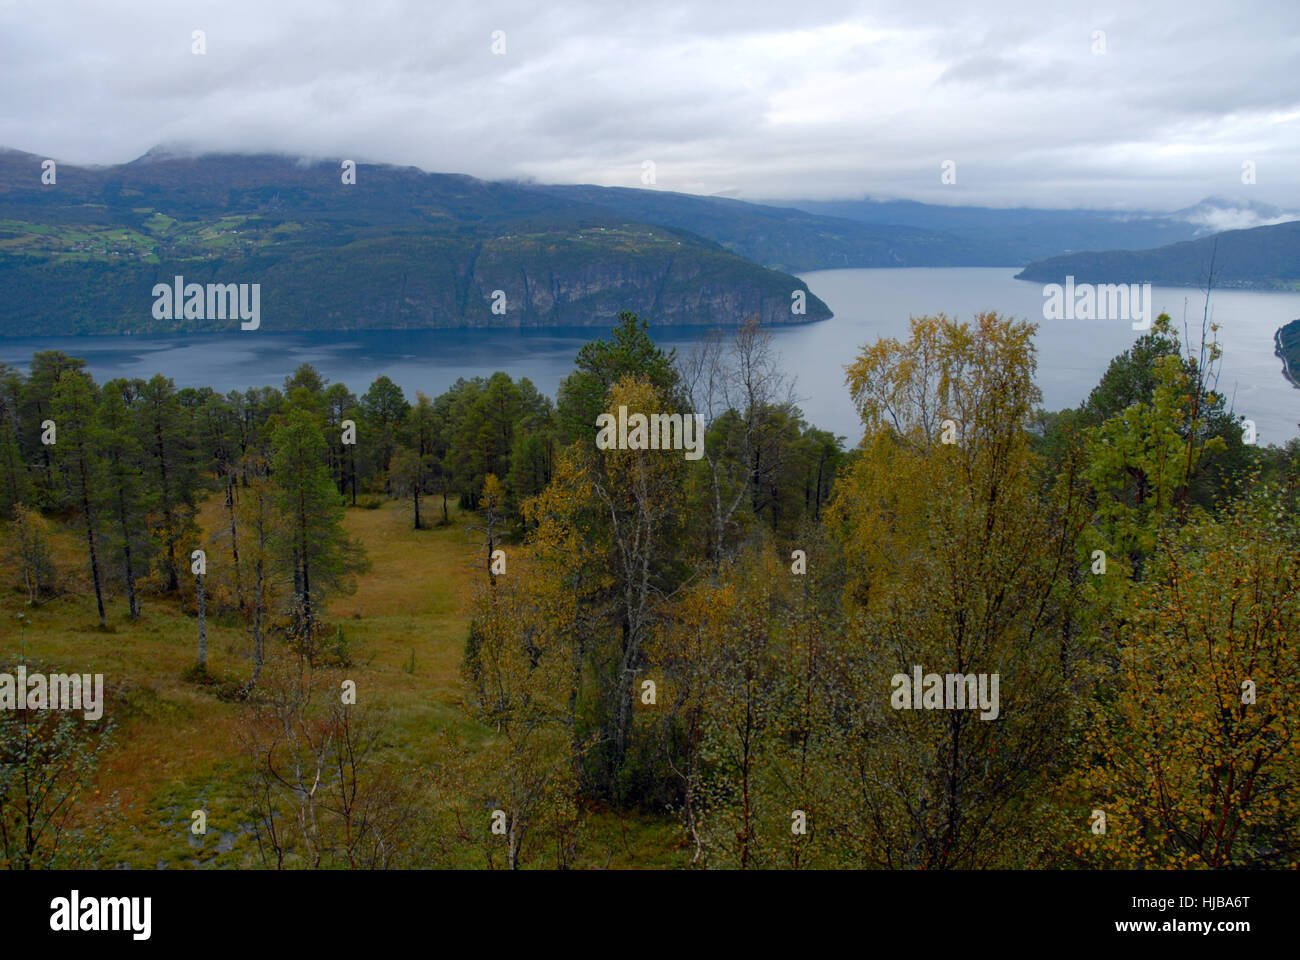 Albero, alberi, Norvegia, Fjord, dirupi, Firth, montagna, albero, alberi, montagne Foto Stock